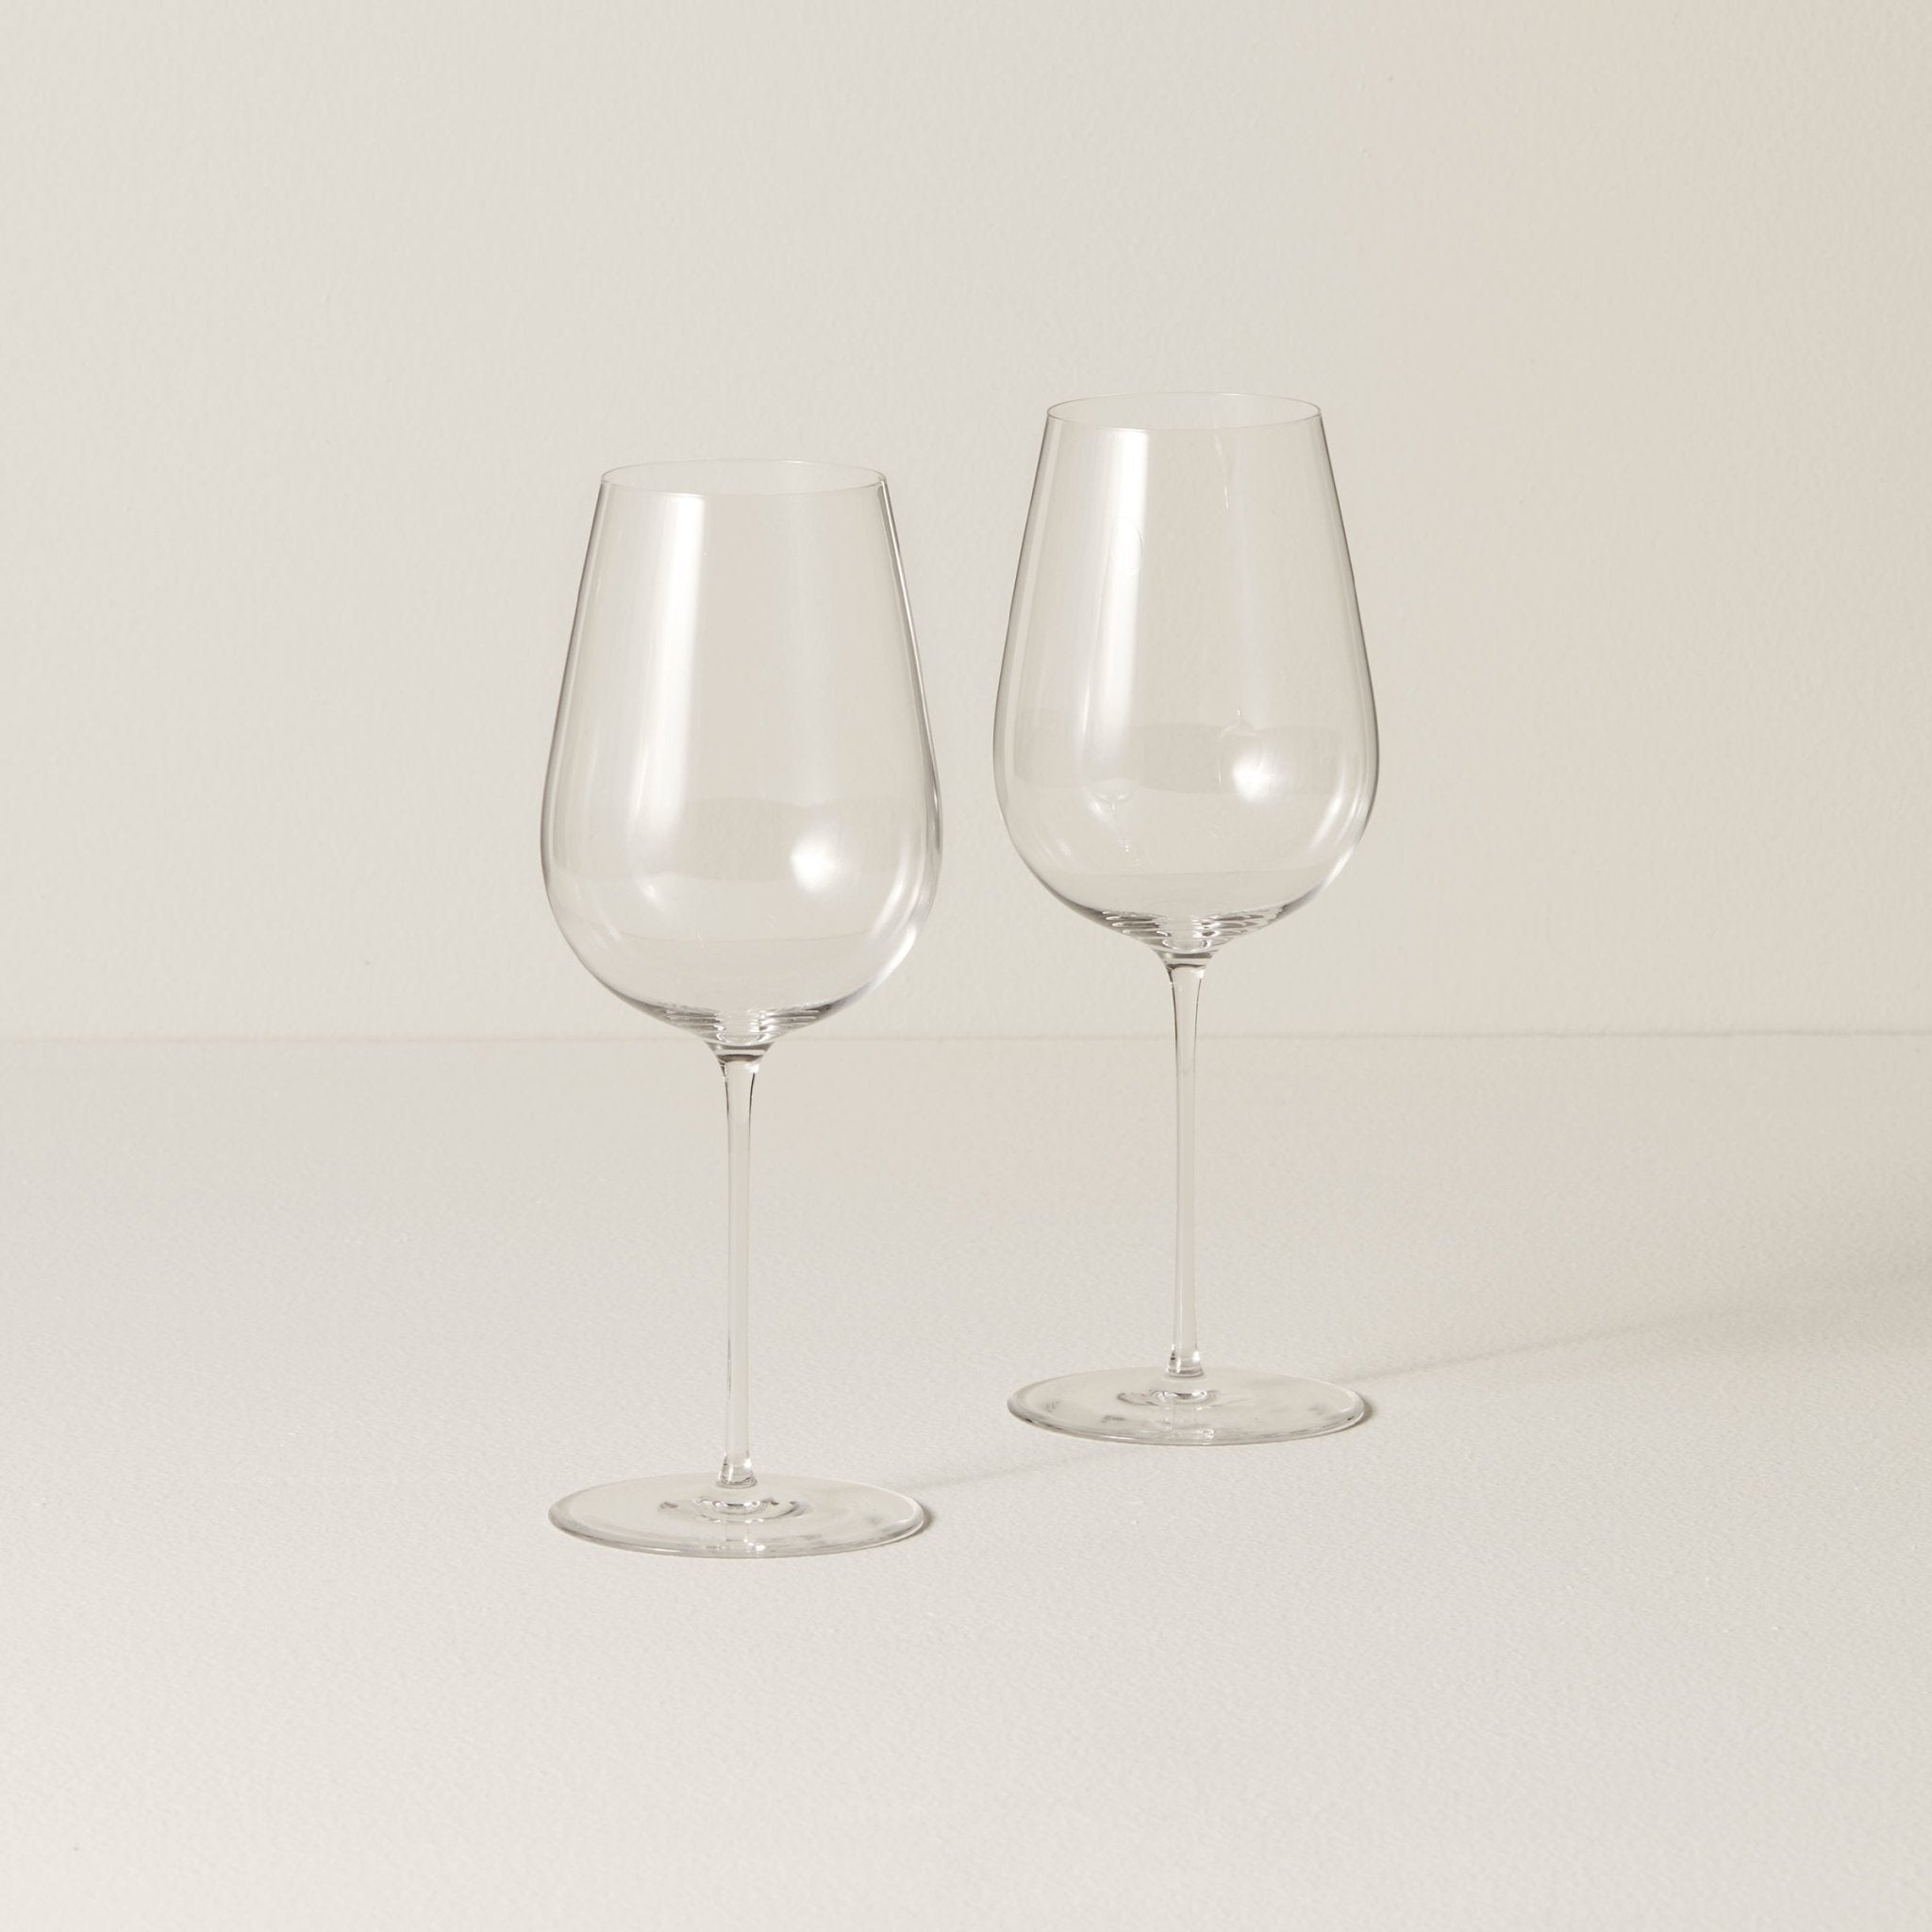 Lenox Signature Series Warm Region 4-Piece Wine Glass Set